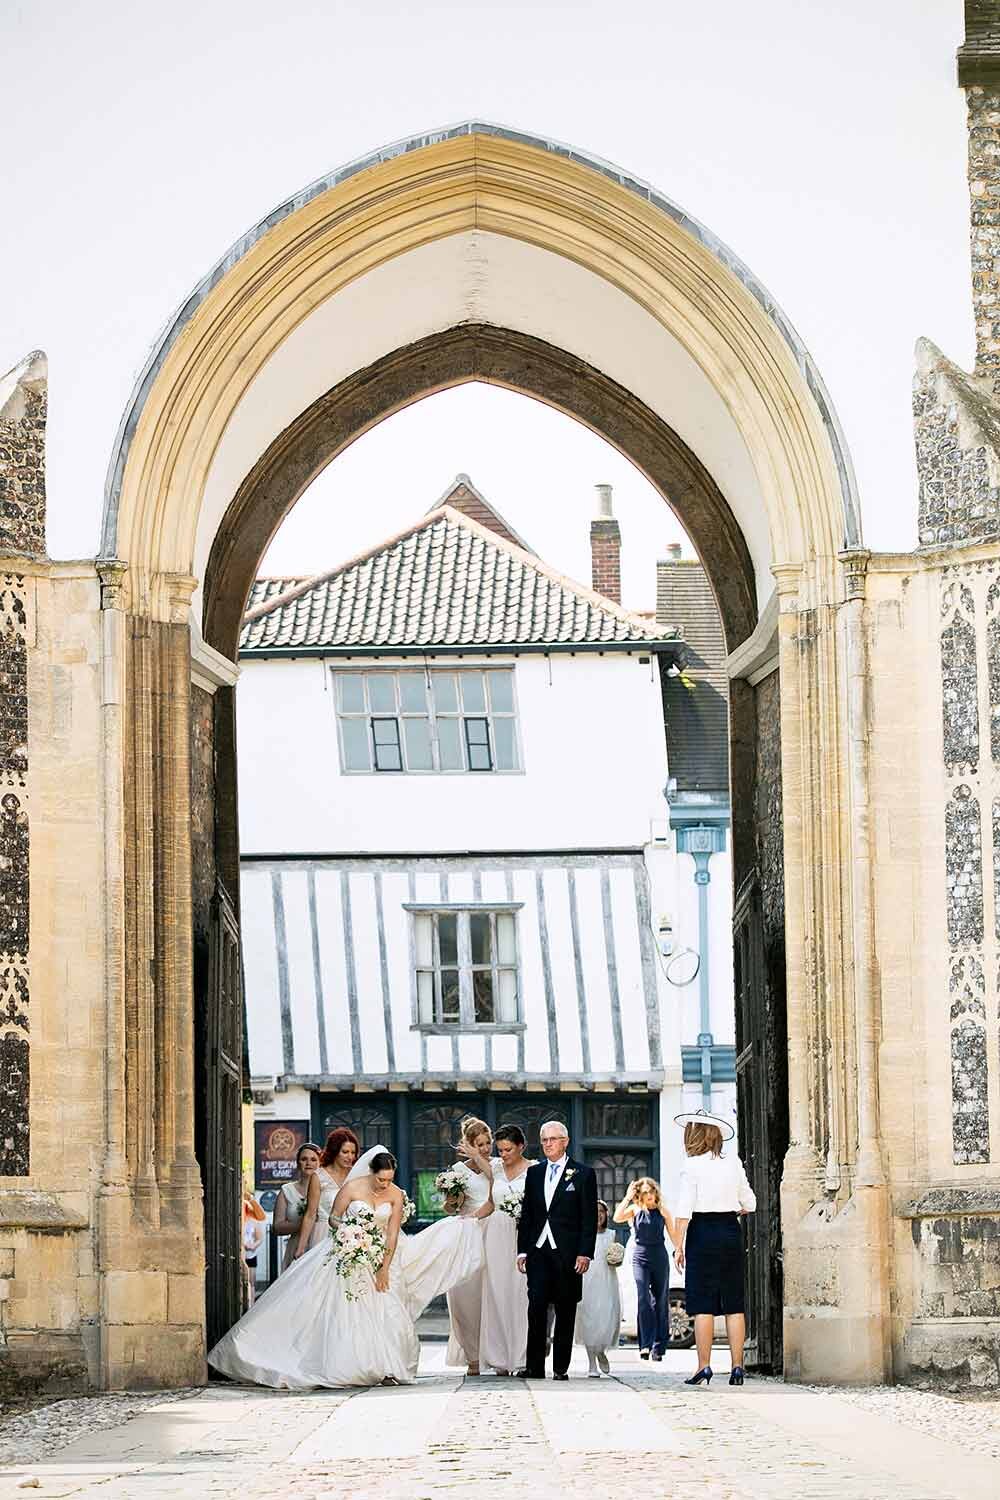 norwich-wedding-cathedral-entrance.jpg